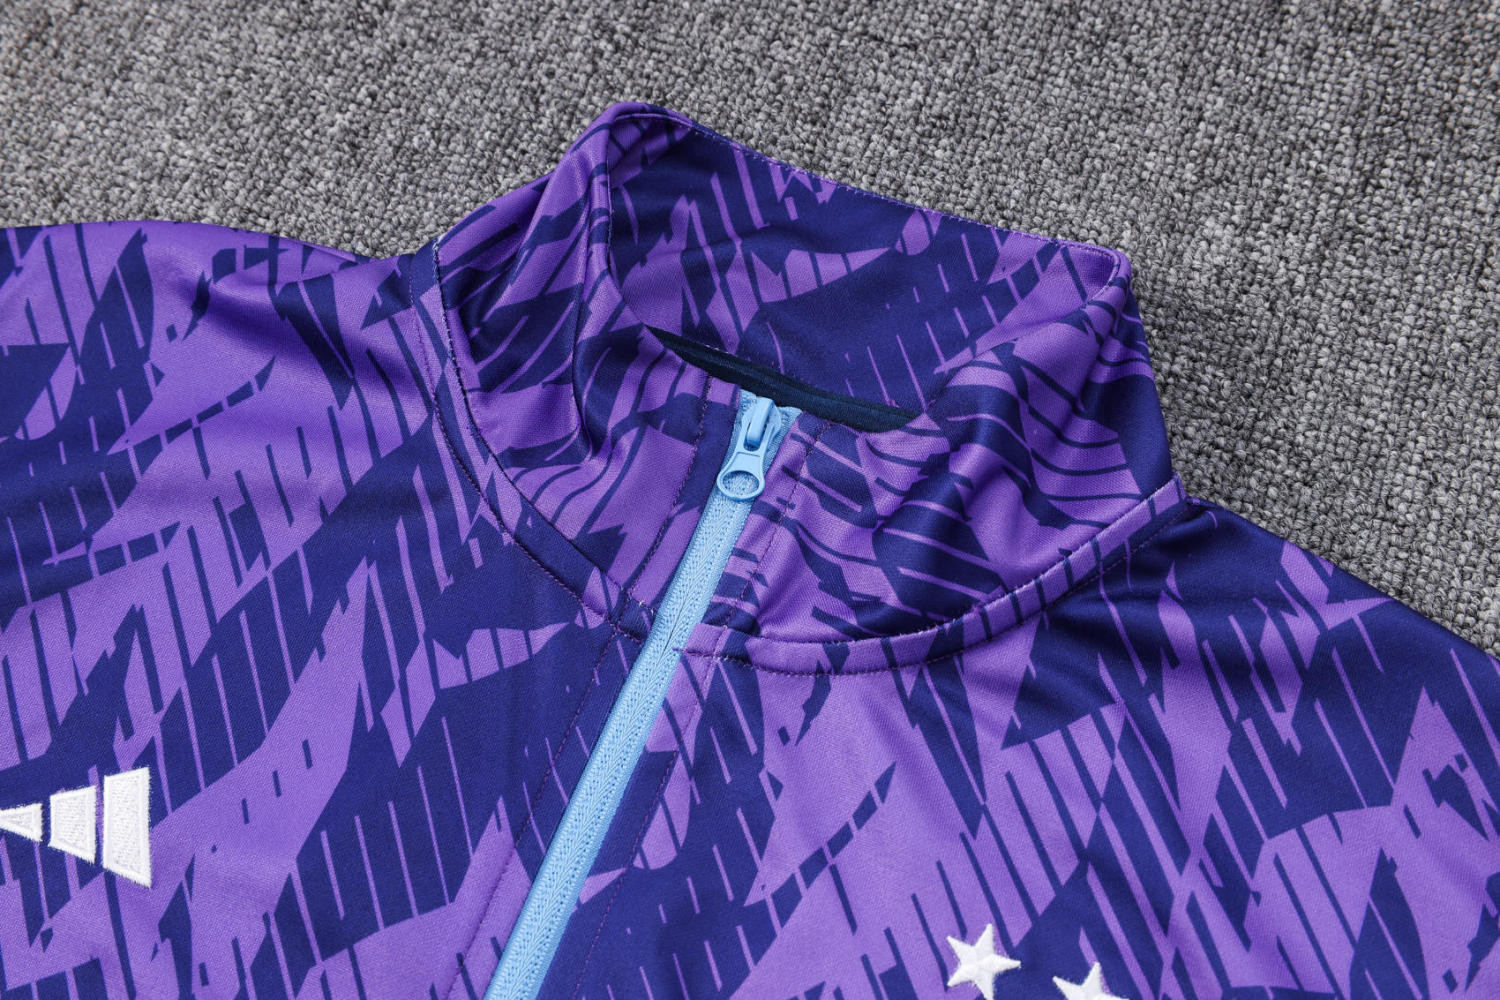 Argentina Soccer Jacket + Pants Replica Purple 2022 Mens